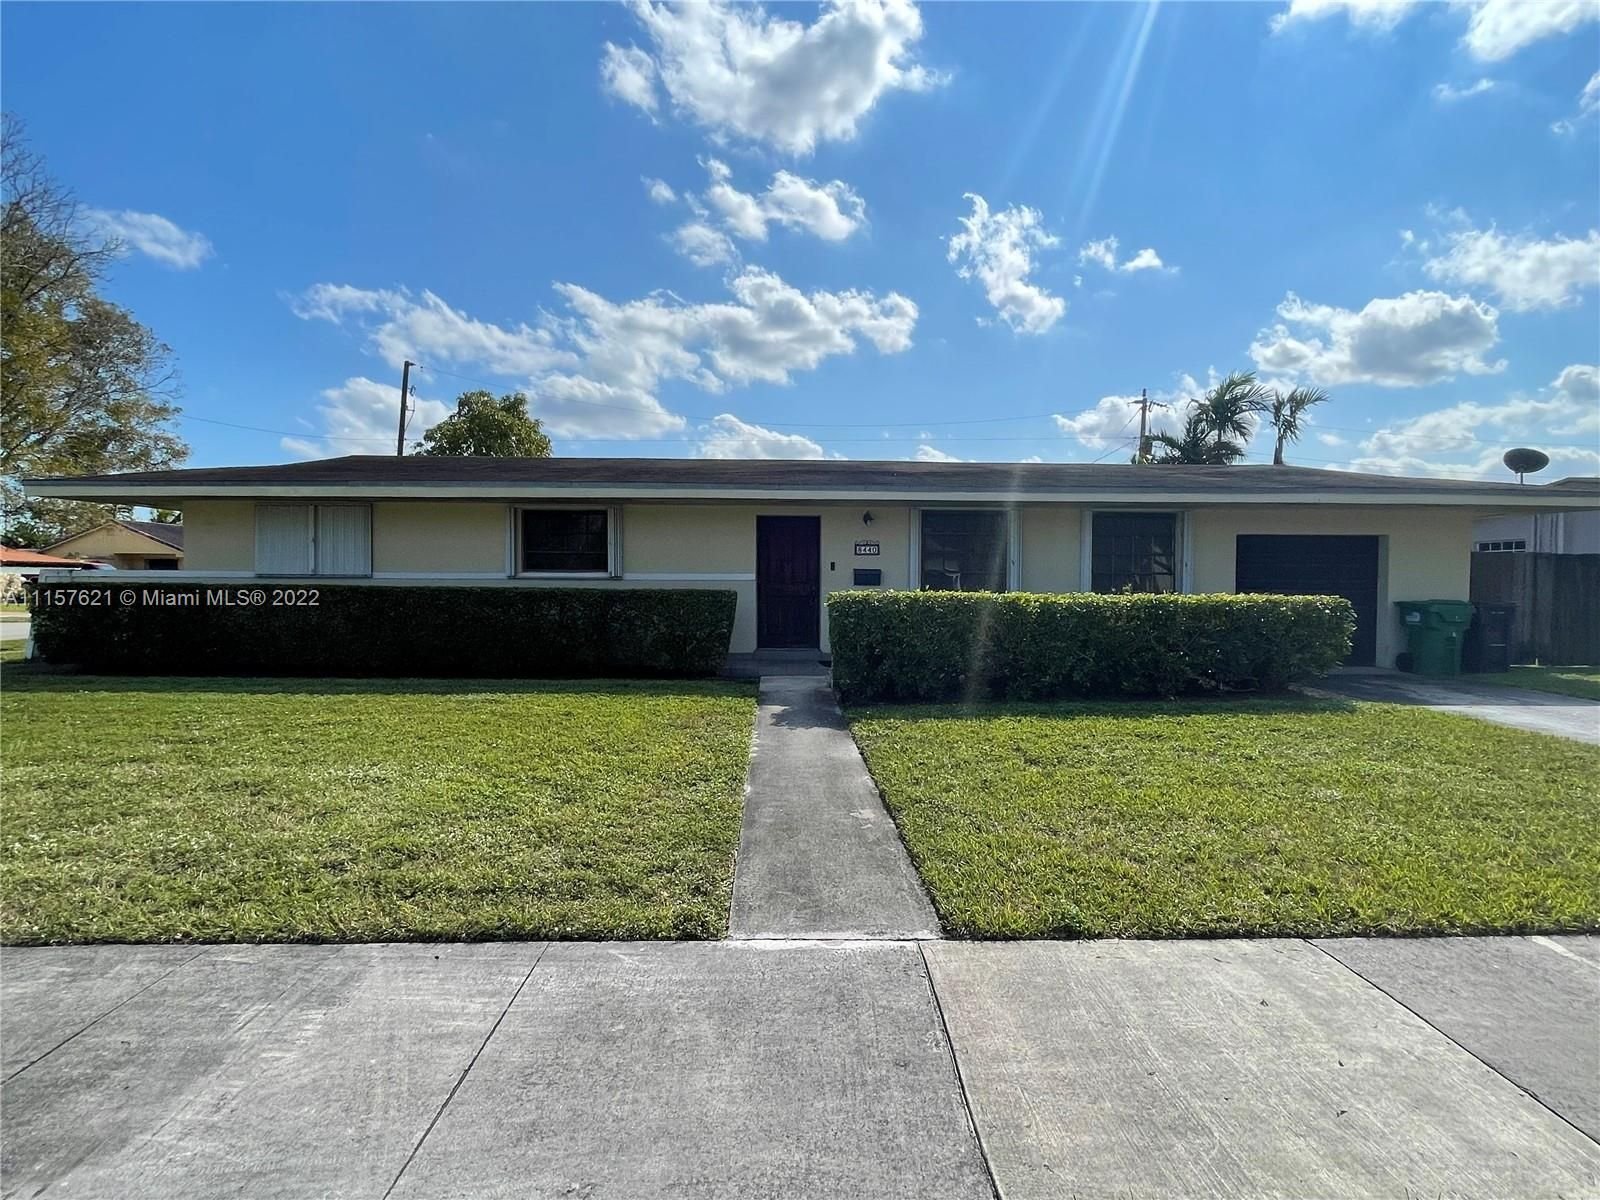 Real estate property located at 8440 12th St, Miami-Dade County, Miami, FL